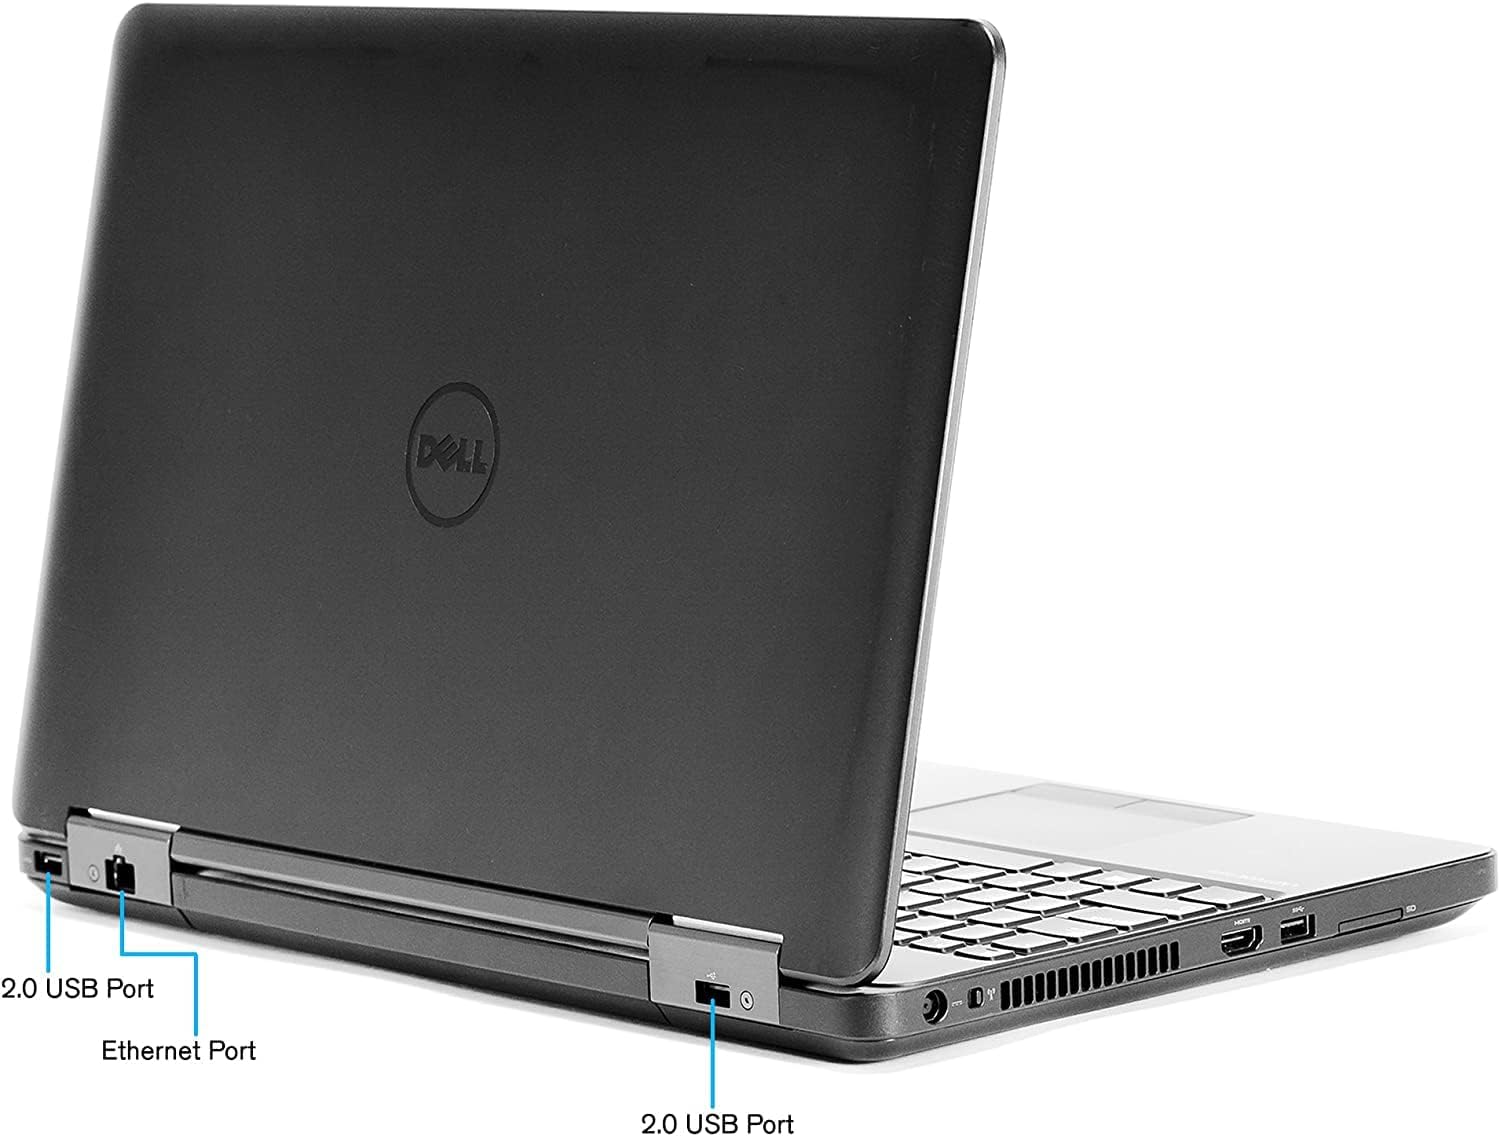 Refurbished Dell Latitude E5540 Laptop Computer, Intel Core i5, 16GB Ram, 500GB Hard Drive, Windows 11 Operating System, 1 Year Warranty